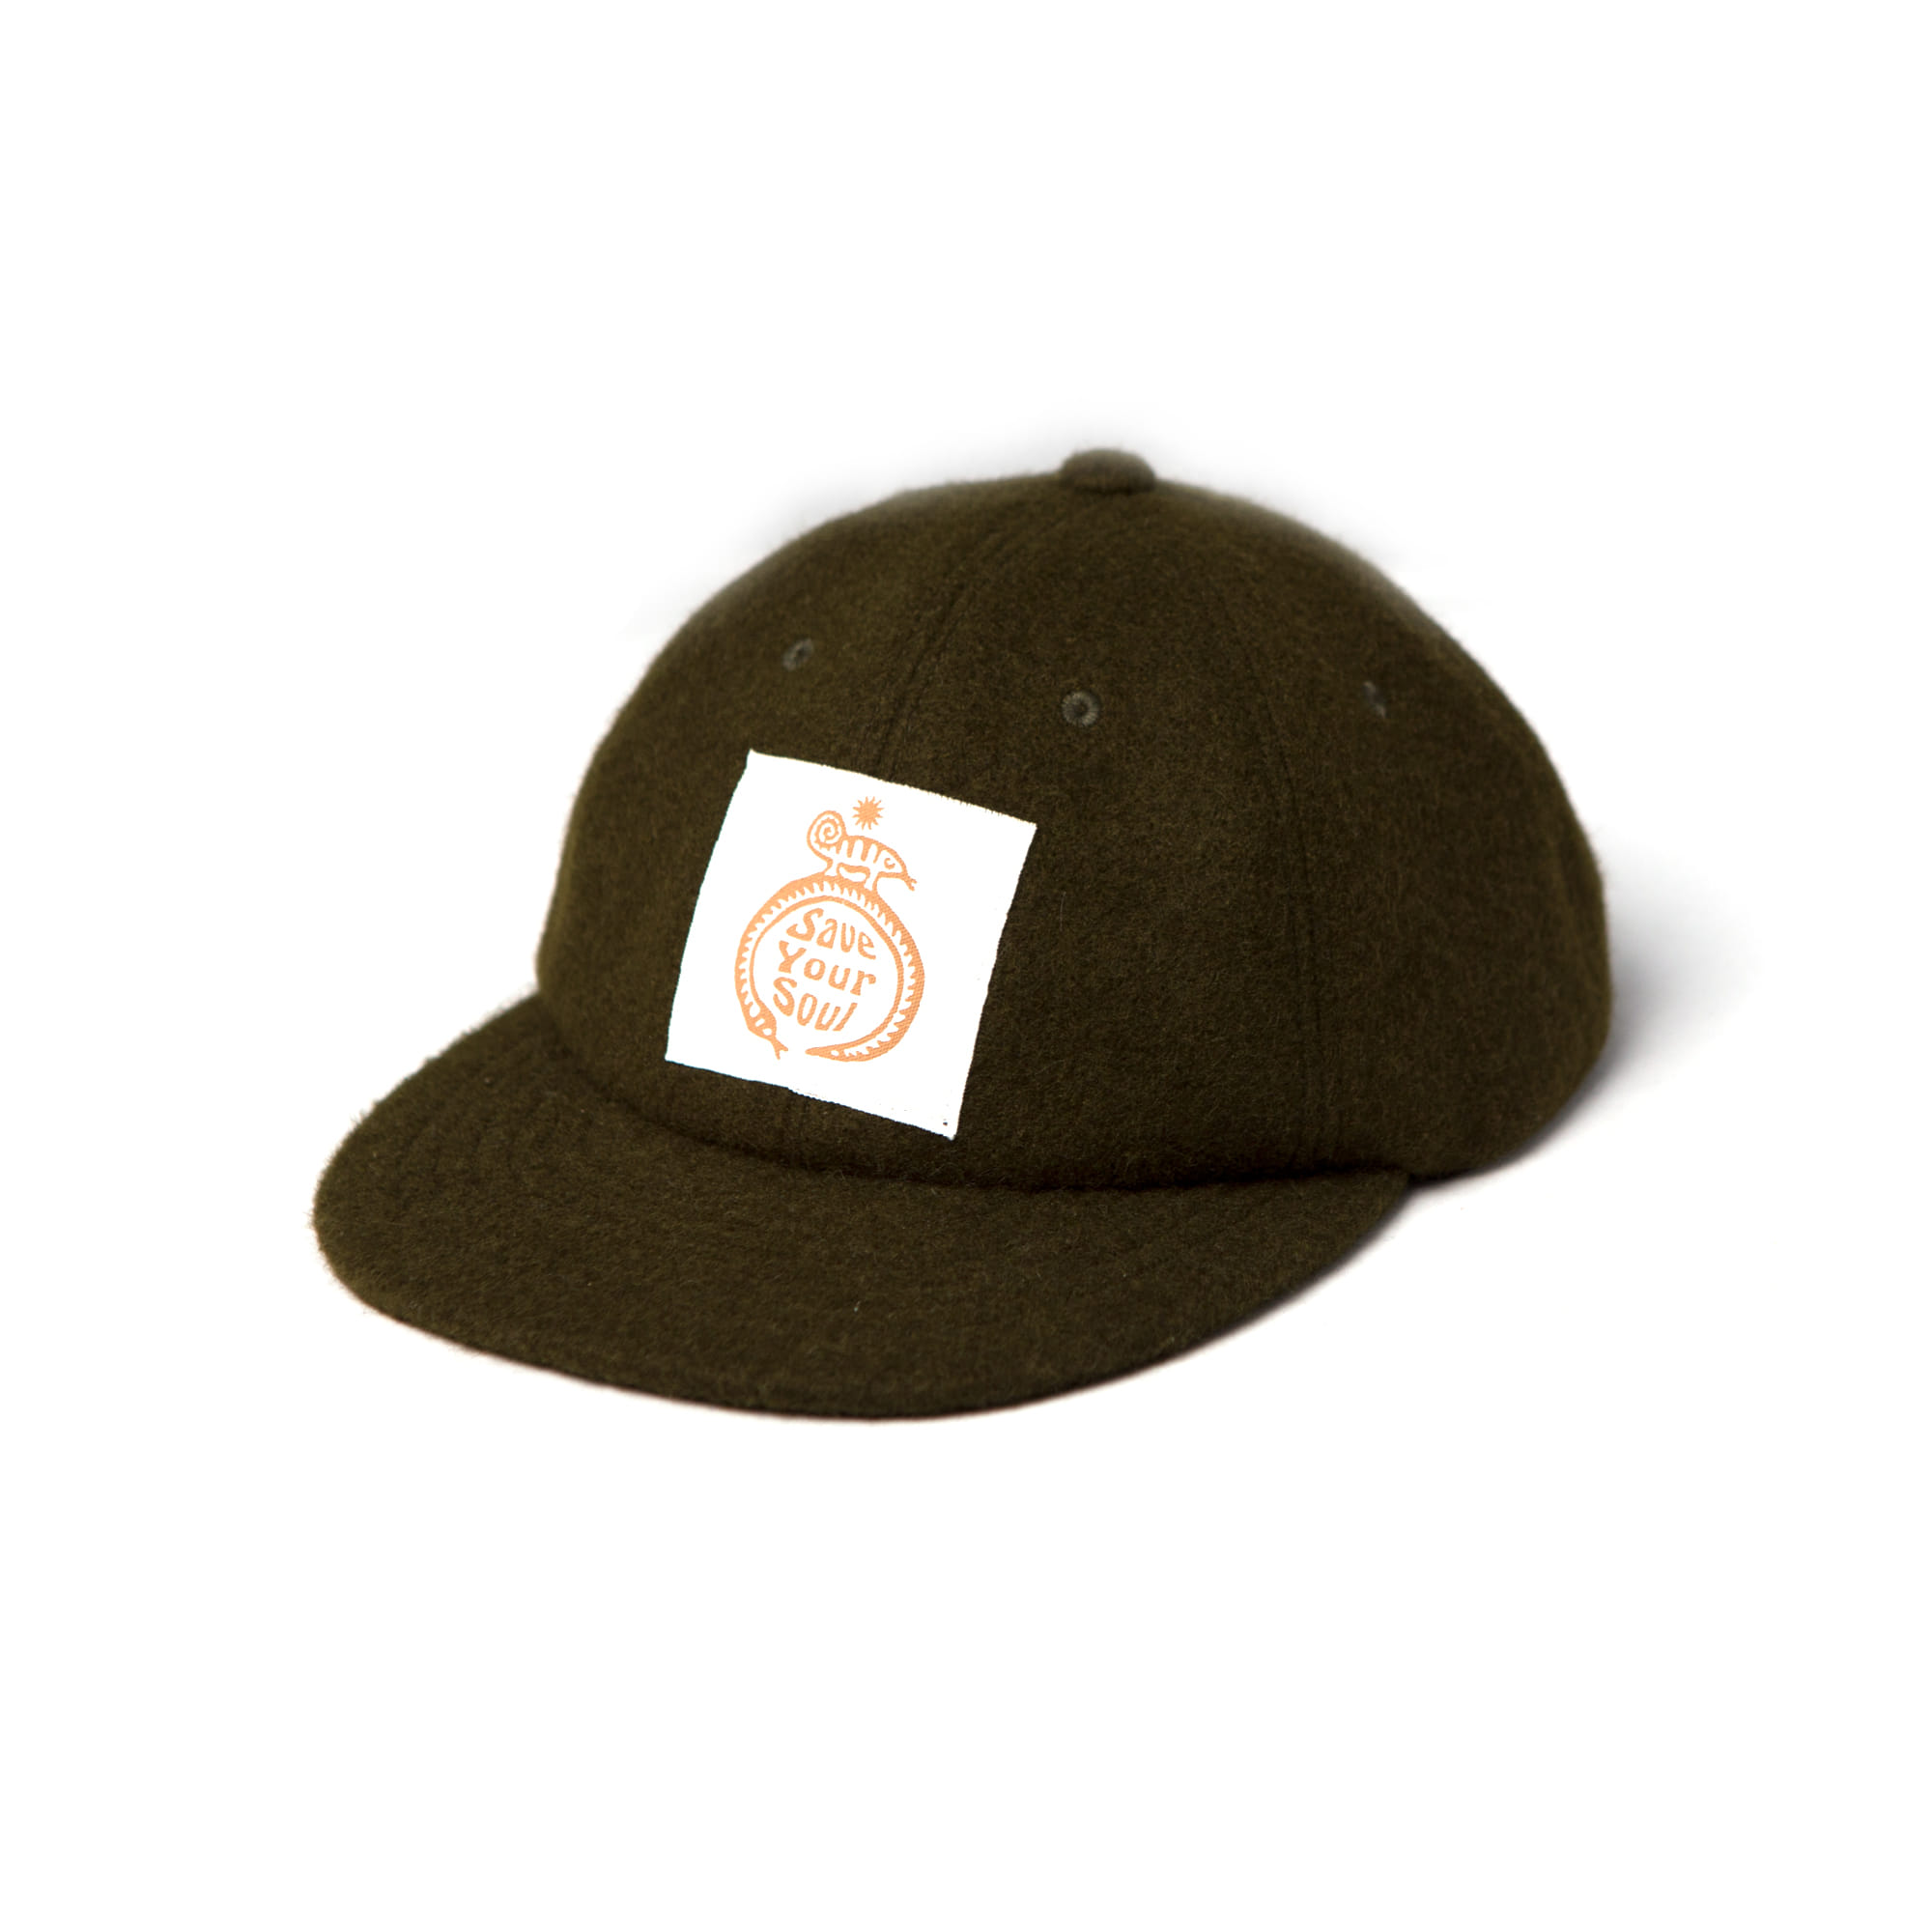 [Blowind] &quot;Save your soul&quot; Wool ball cap (Olive drab) (60% Sale)